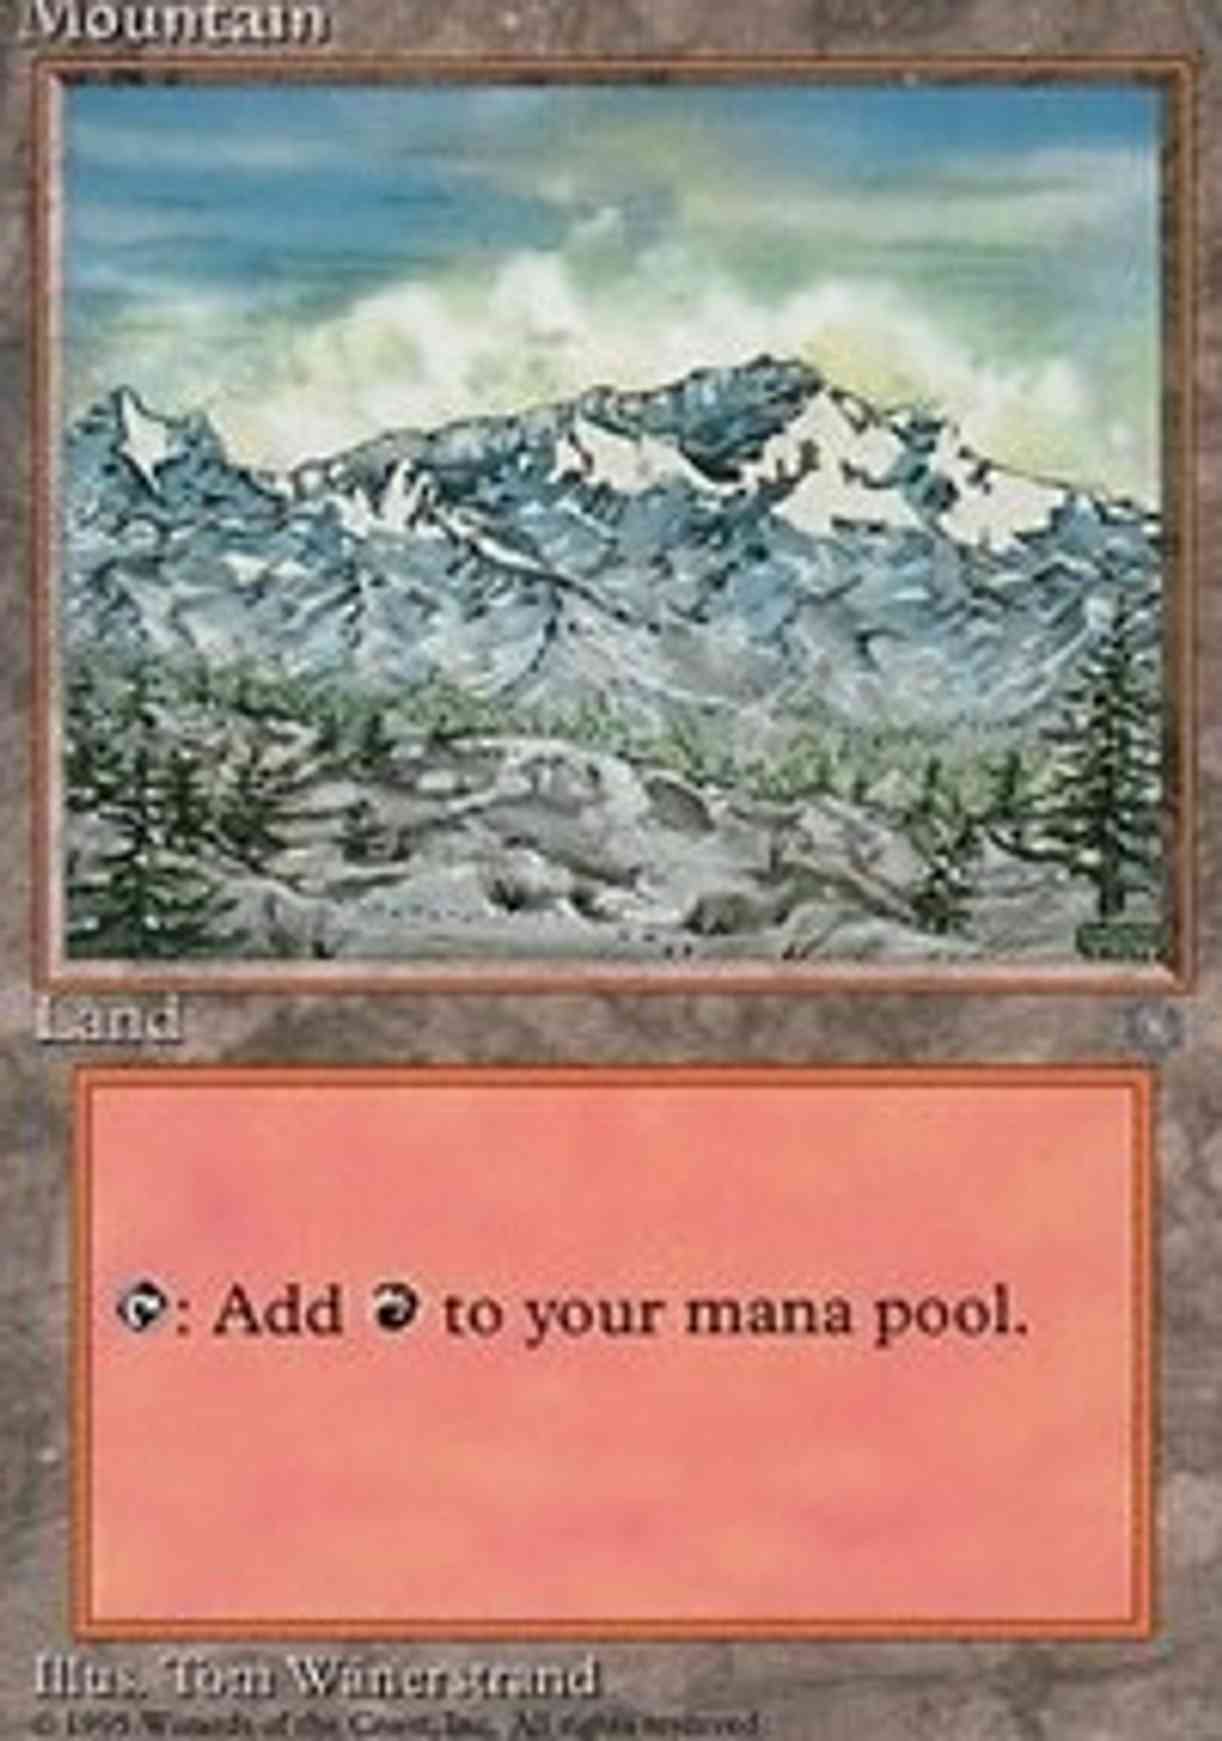 Mountain (340) magic card front